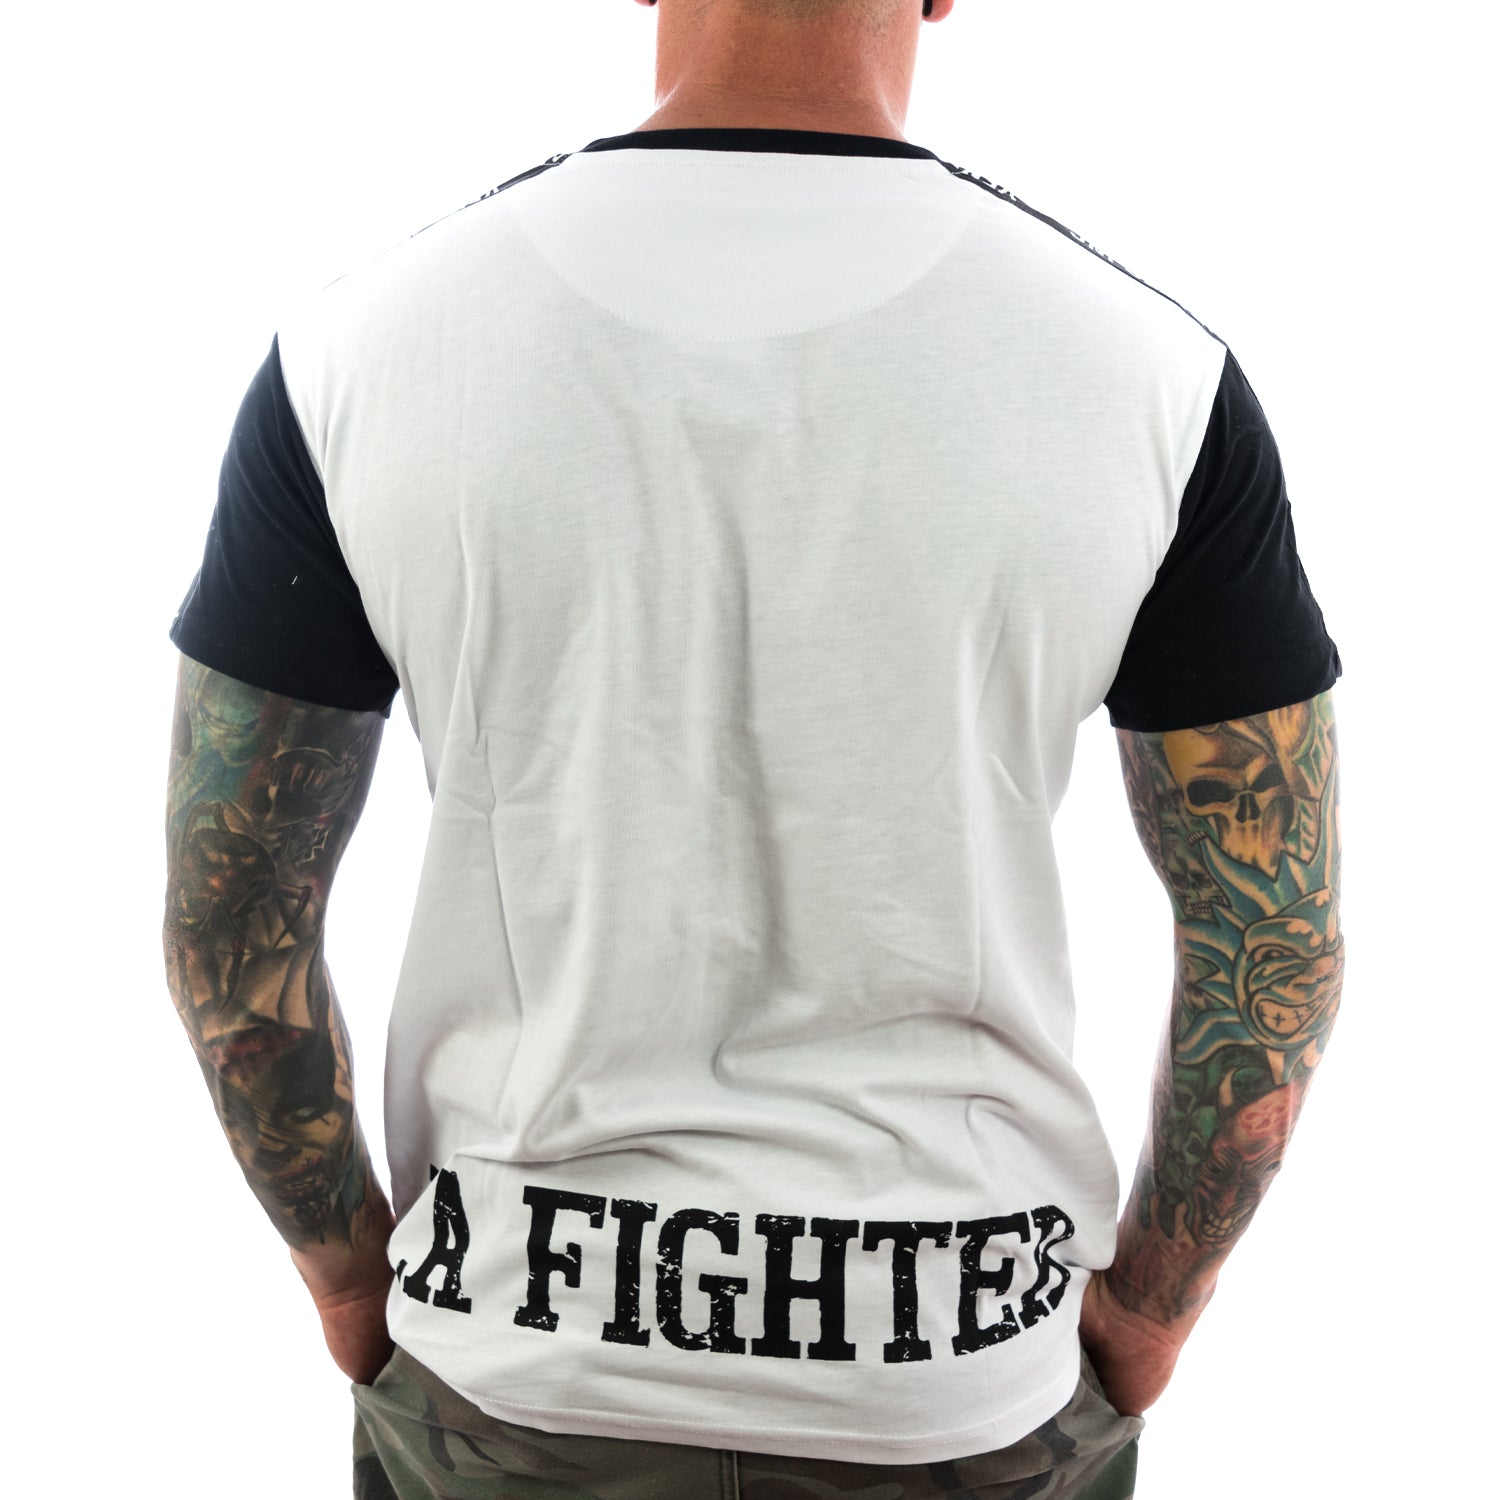 Vendetta Inc. Shirt La Fighter 1075 white-black